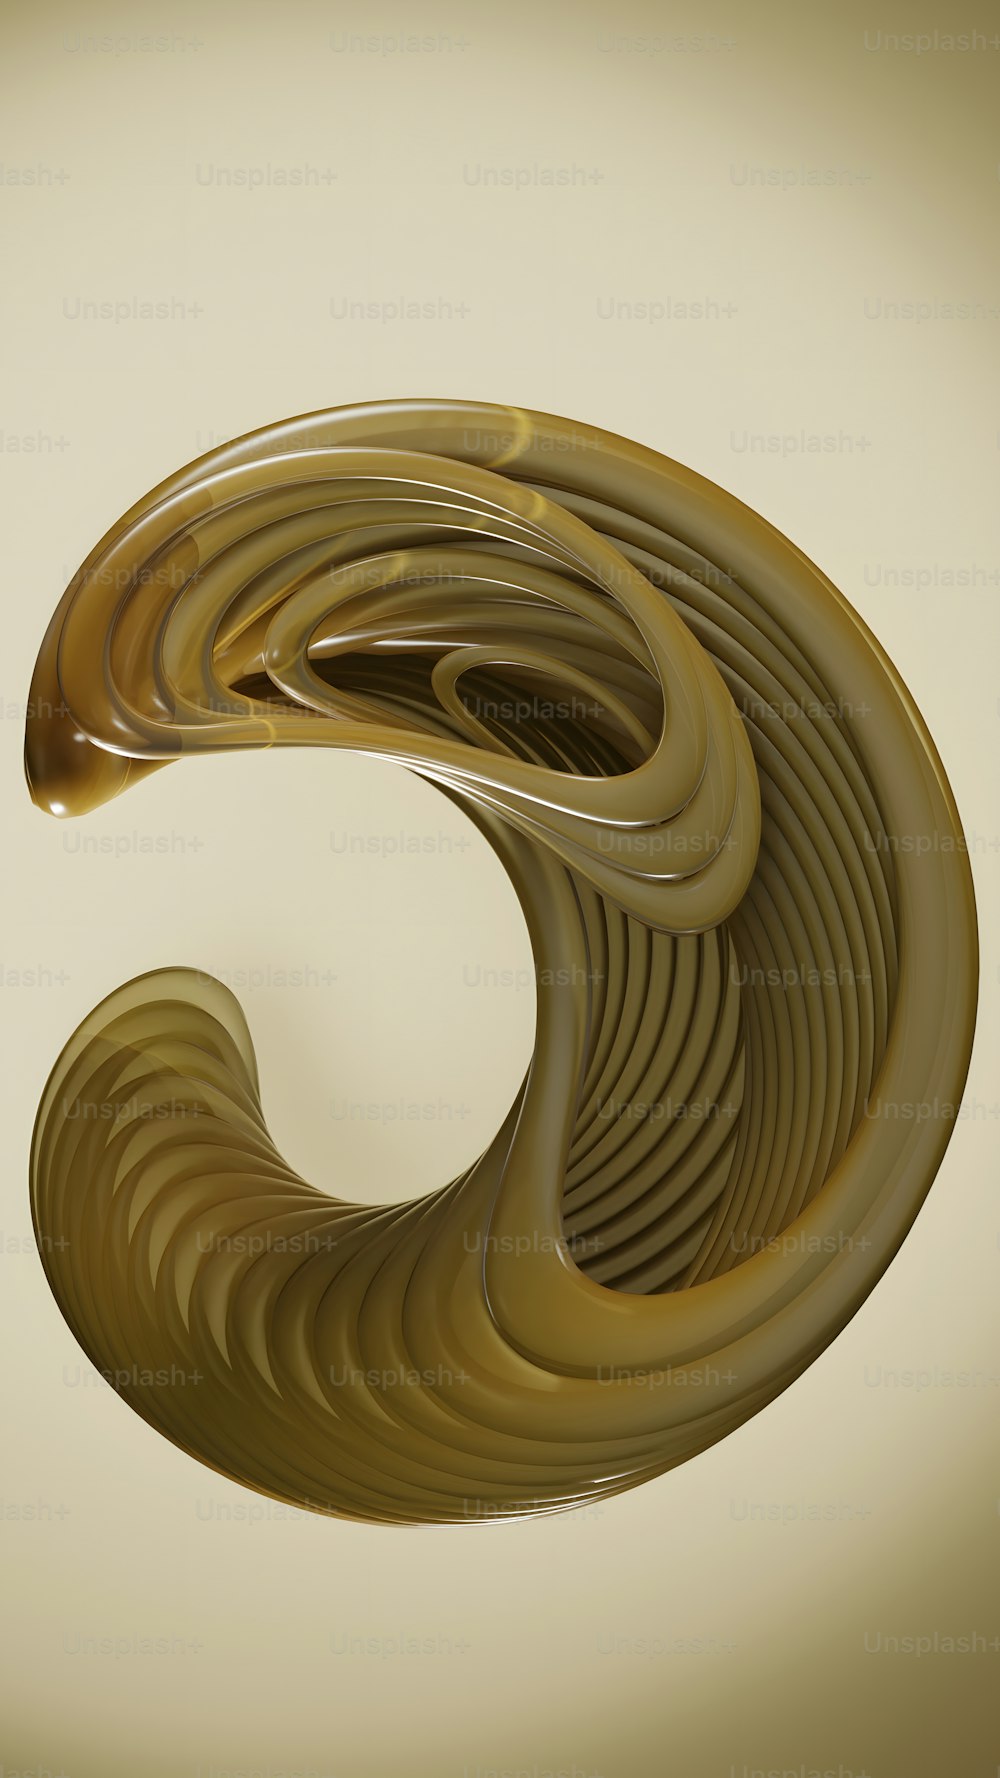 Una imagen generada por computadora de un objeto similar a una espiral